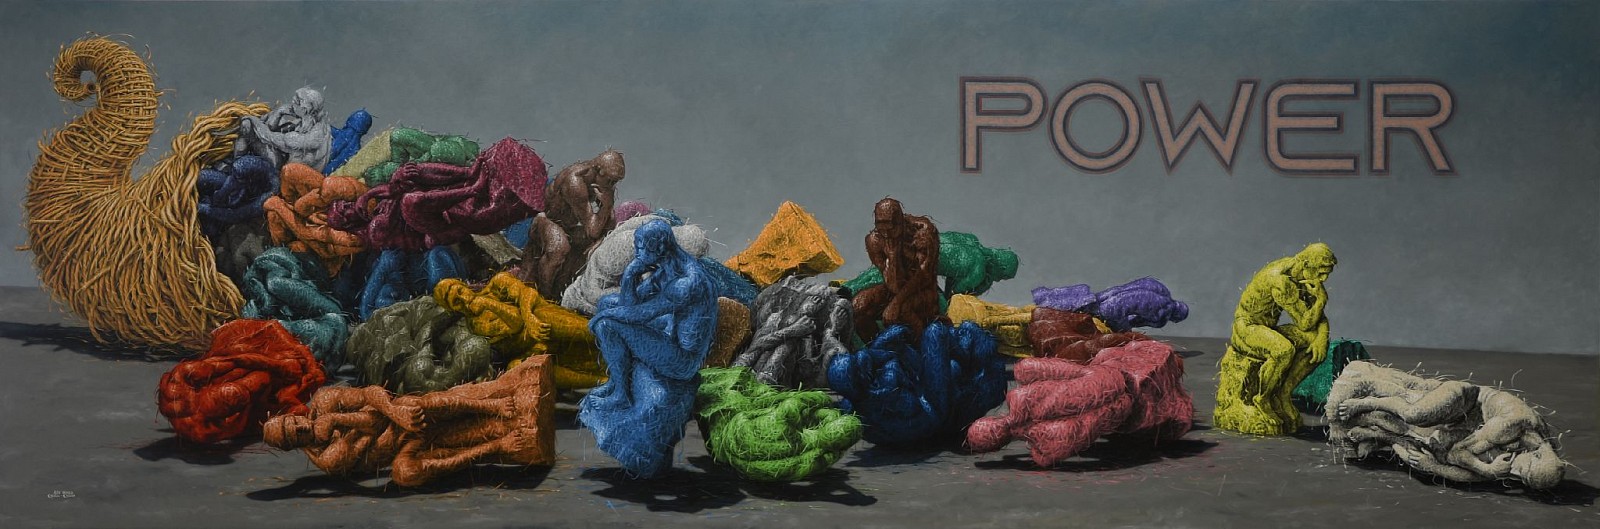 Alexi Torres, POWER, 2023
Original Oil on Canvas, 72 x 216 in.